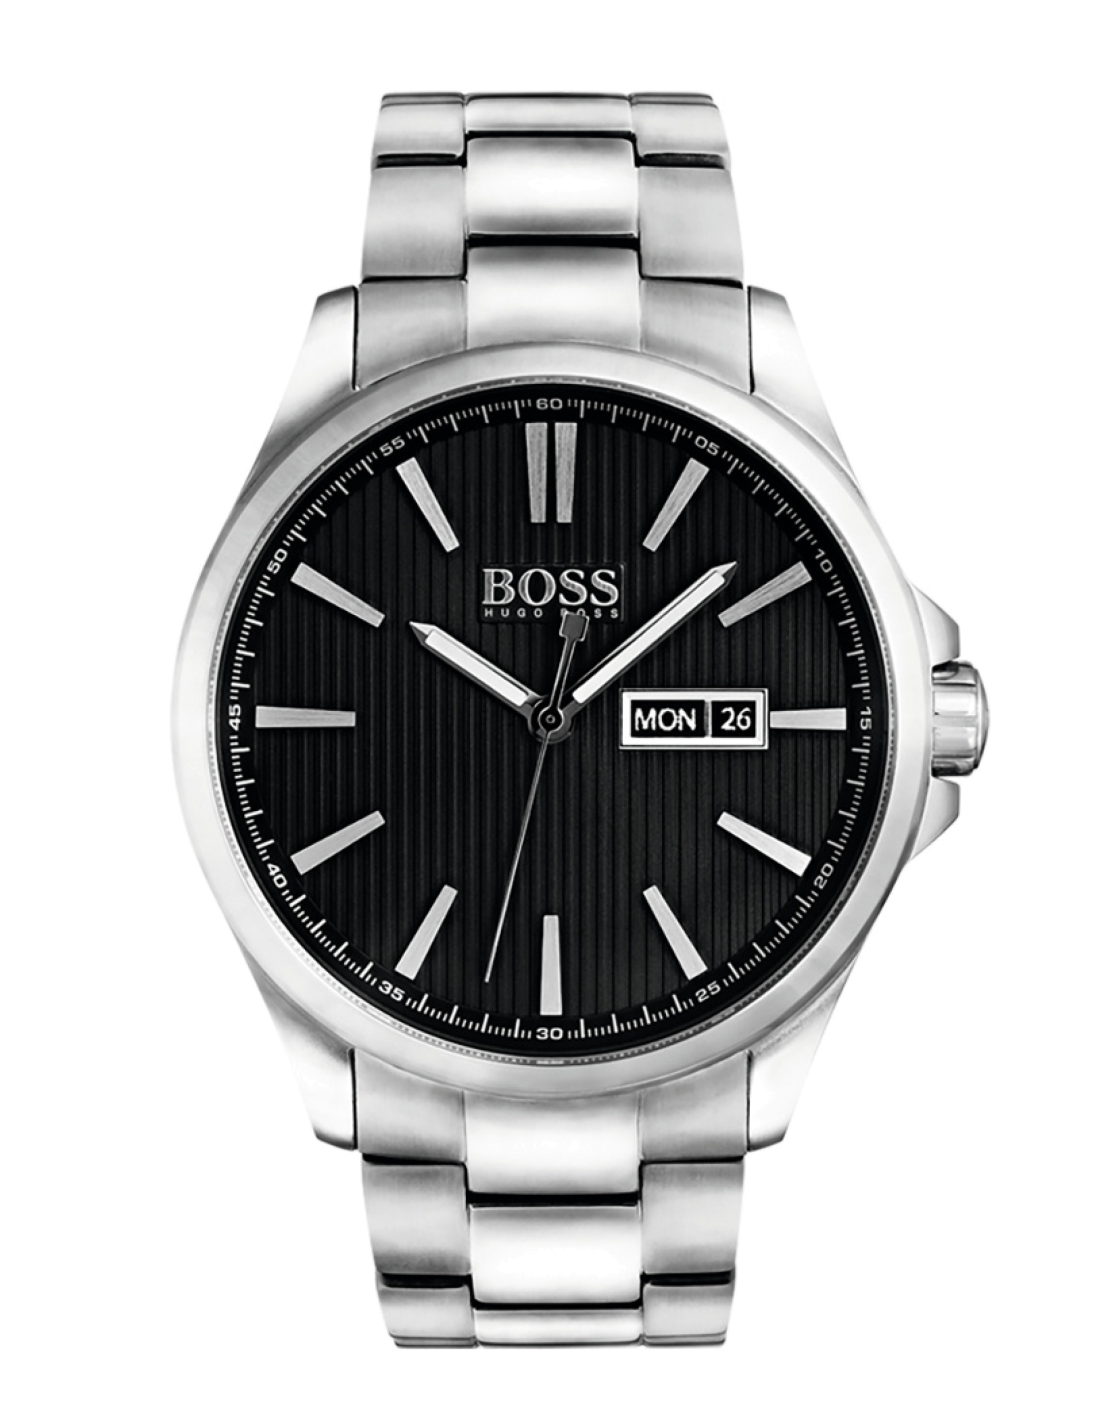 Наручные часы hugo. Наручные часы Boss Black hb1513466. Наручные часы Хьюго босс. Часы Хуго босс мужские. Часы Boss Hugo Boss мужские.